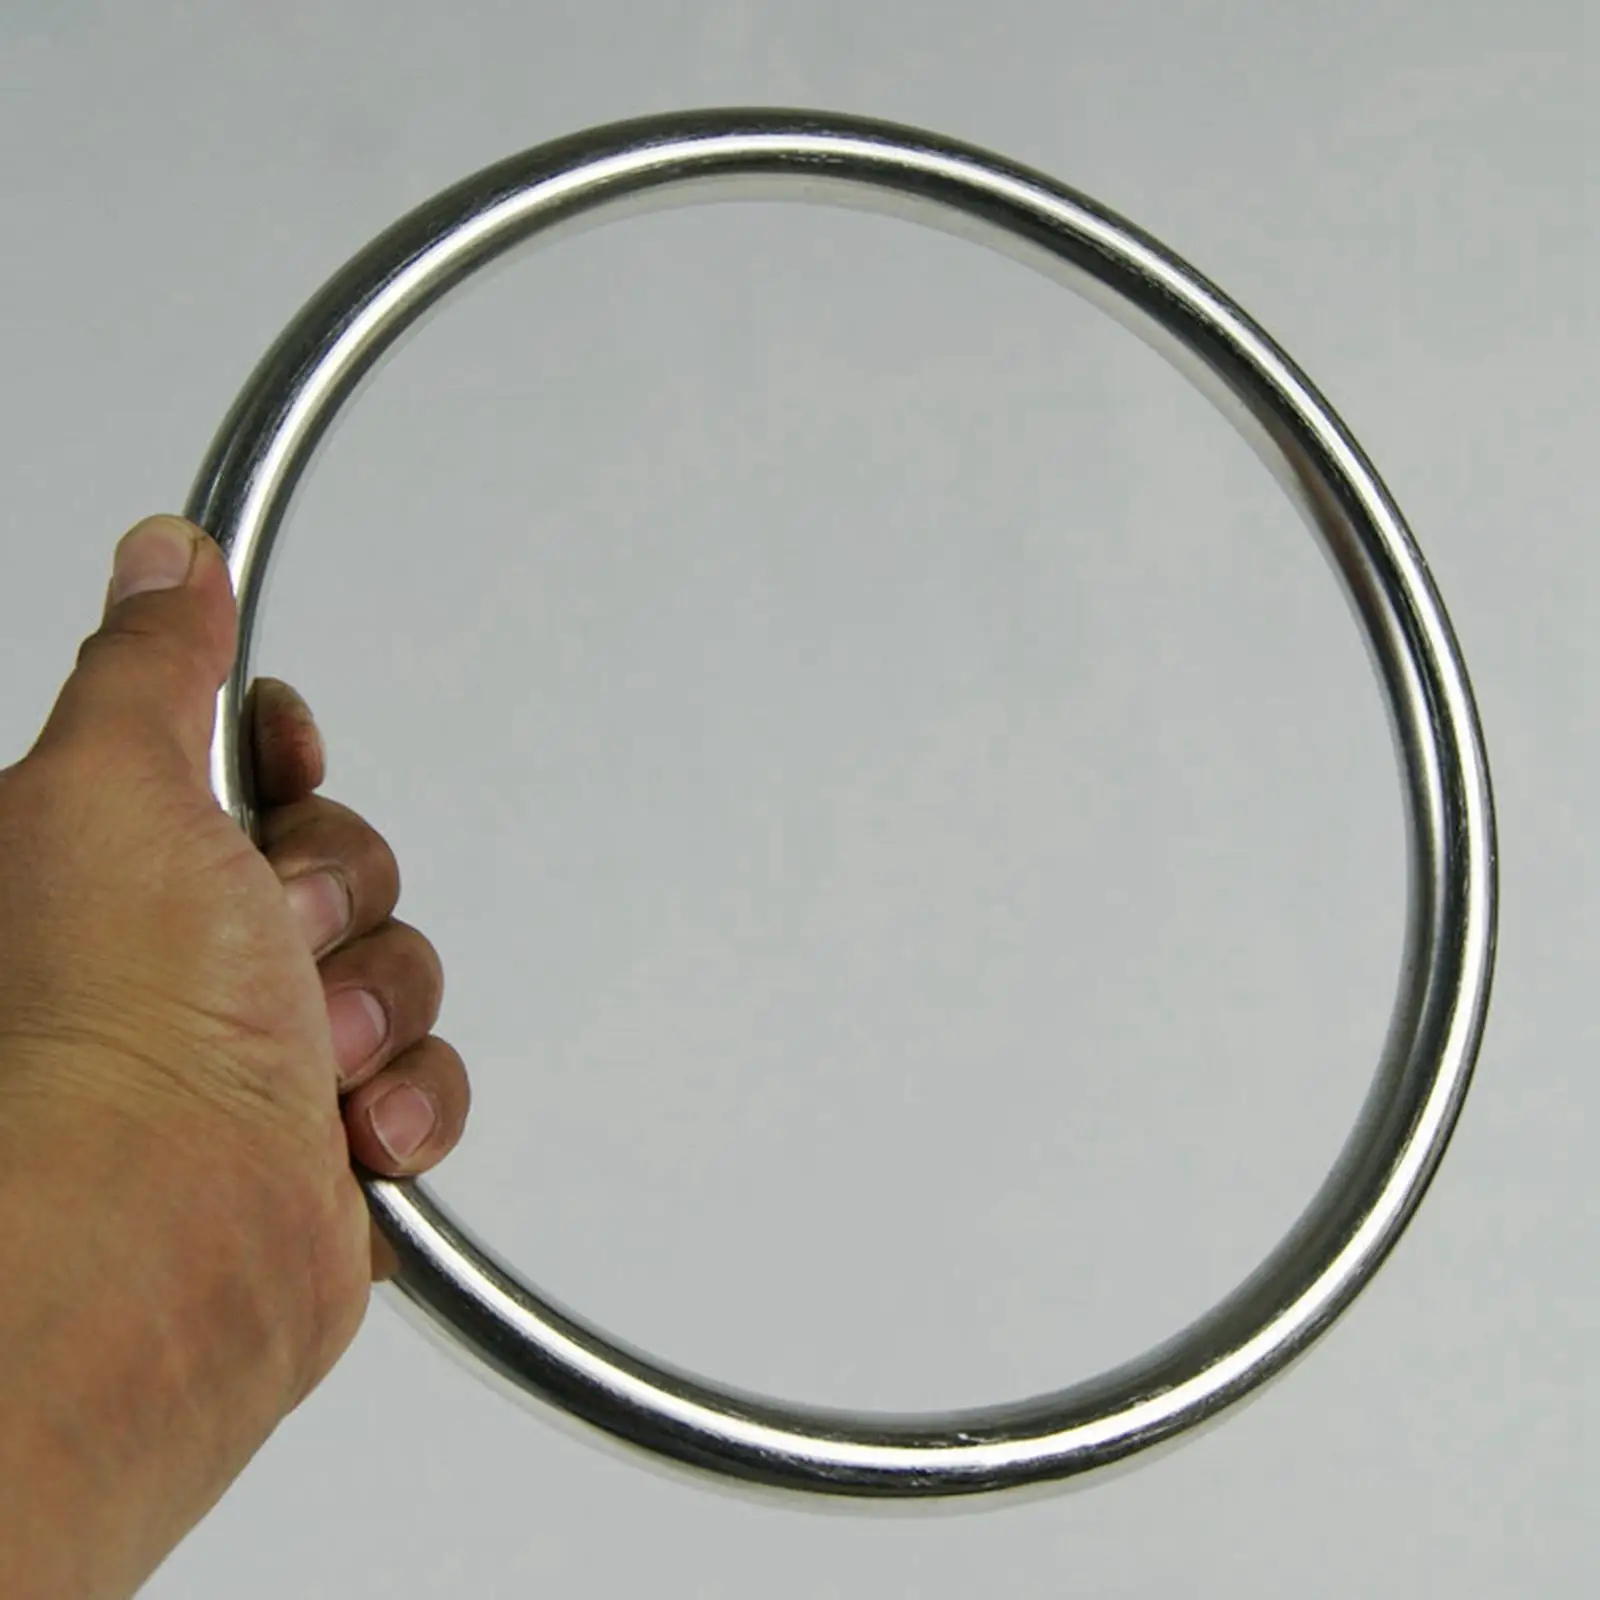 Training Ring, Durable, Strength Training Equipment, Hoop, Exercise Rattan Ring